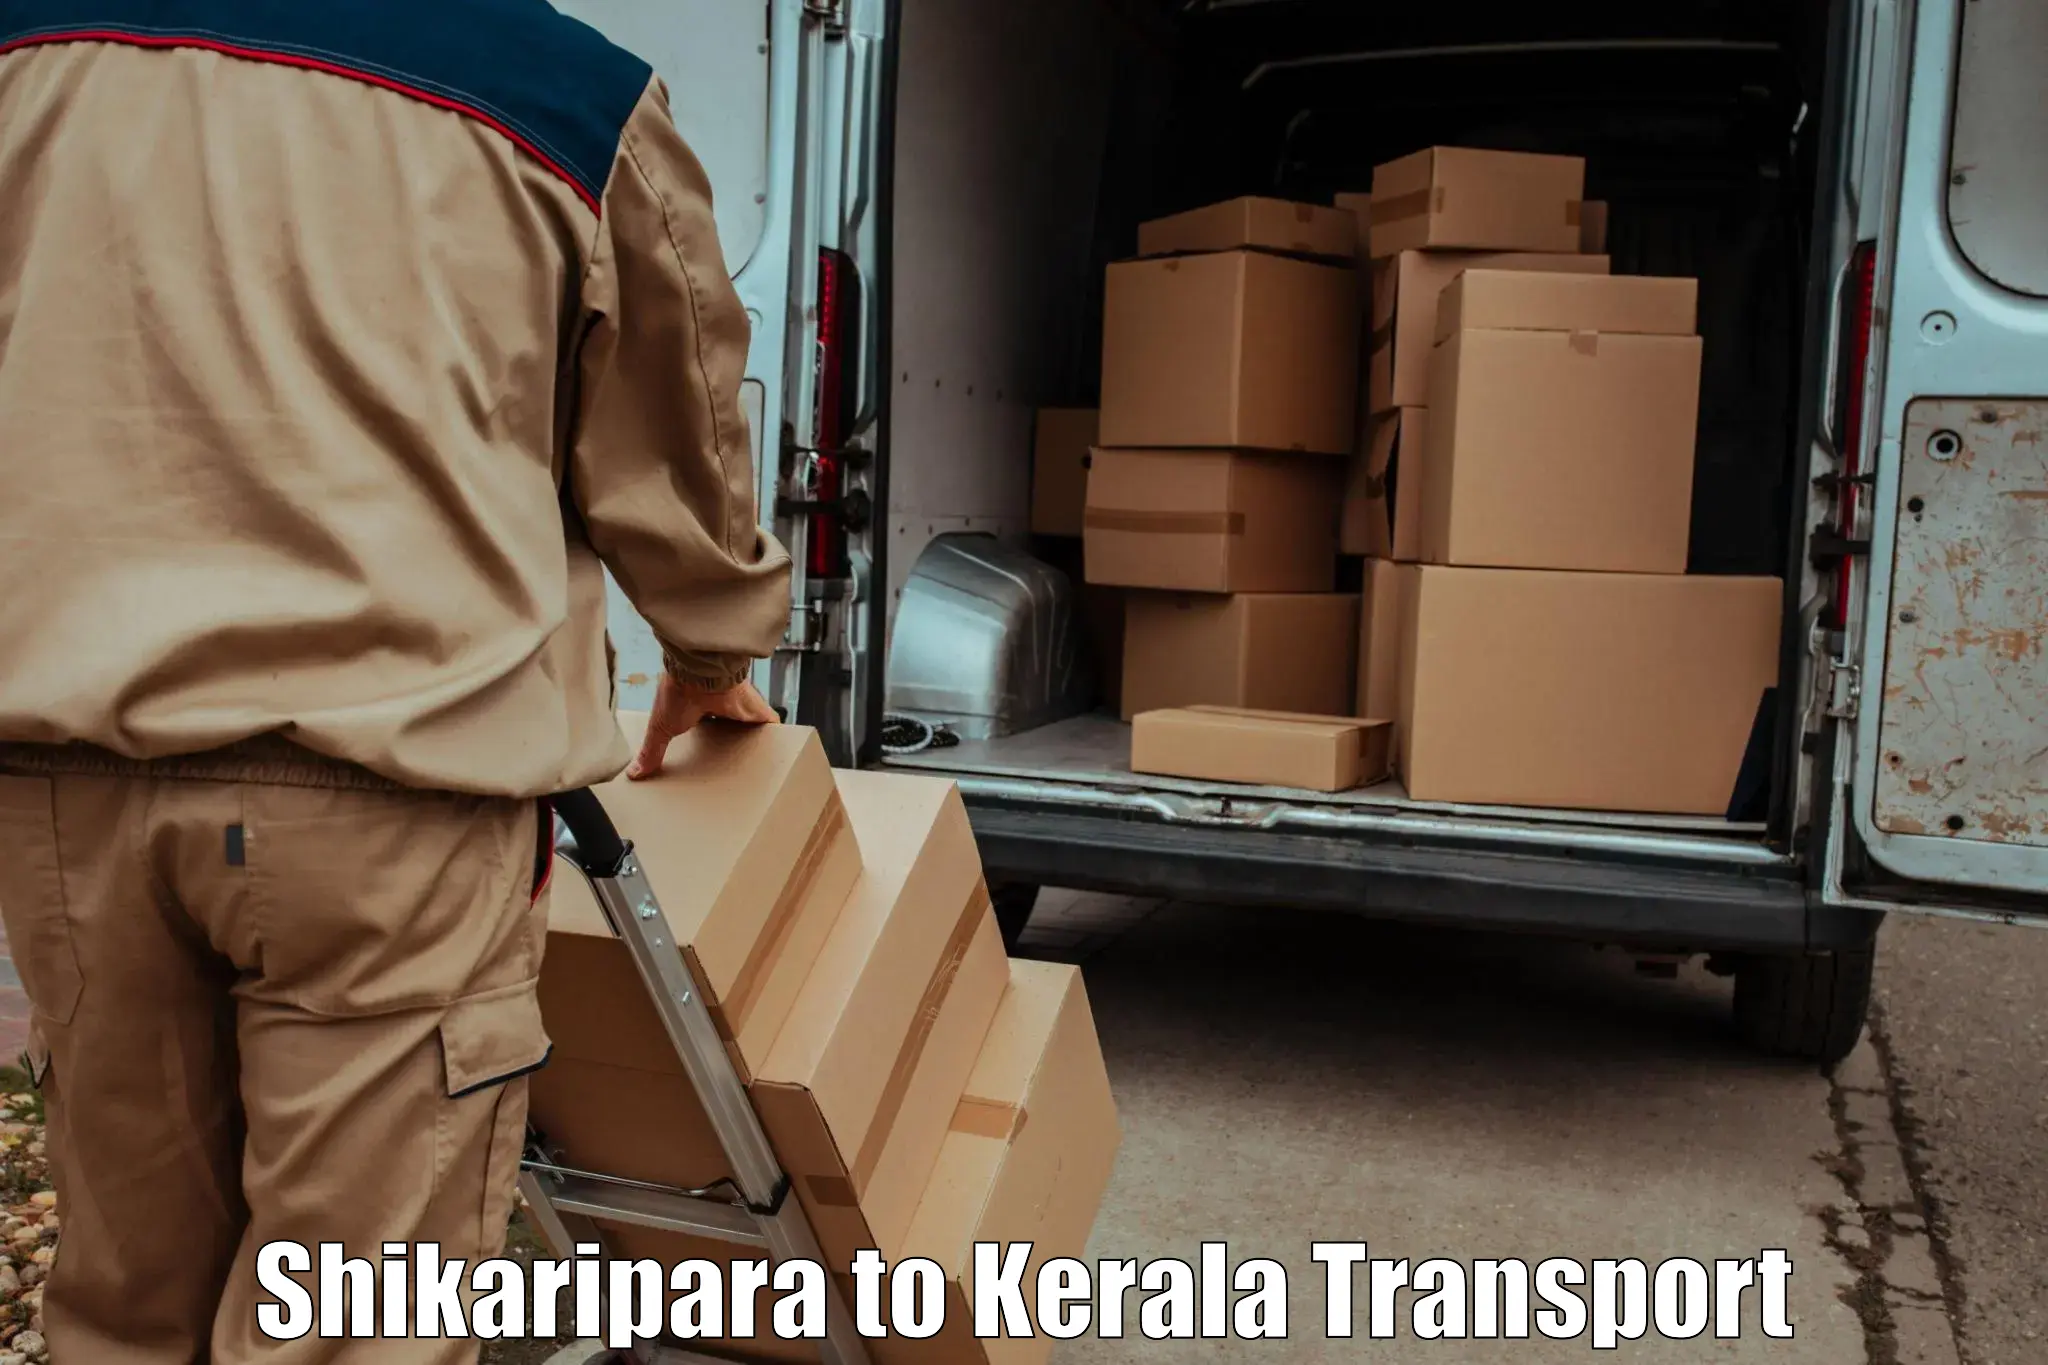 Transport bike from one state to another Shikaripara to Kattappana